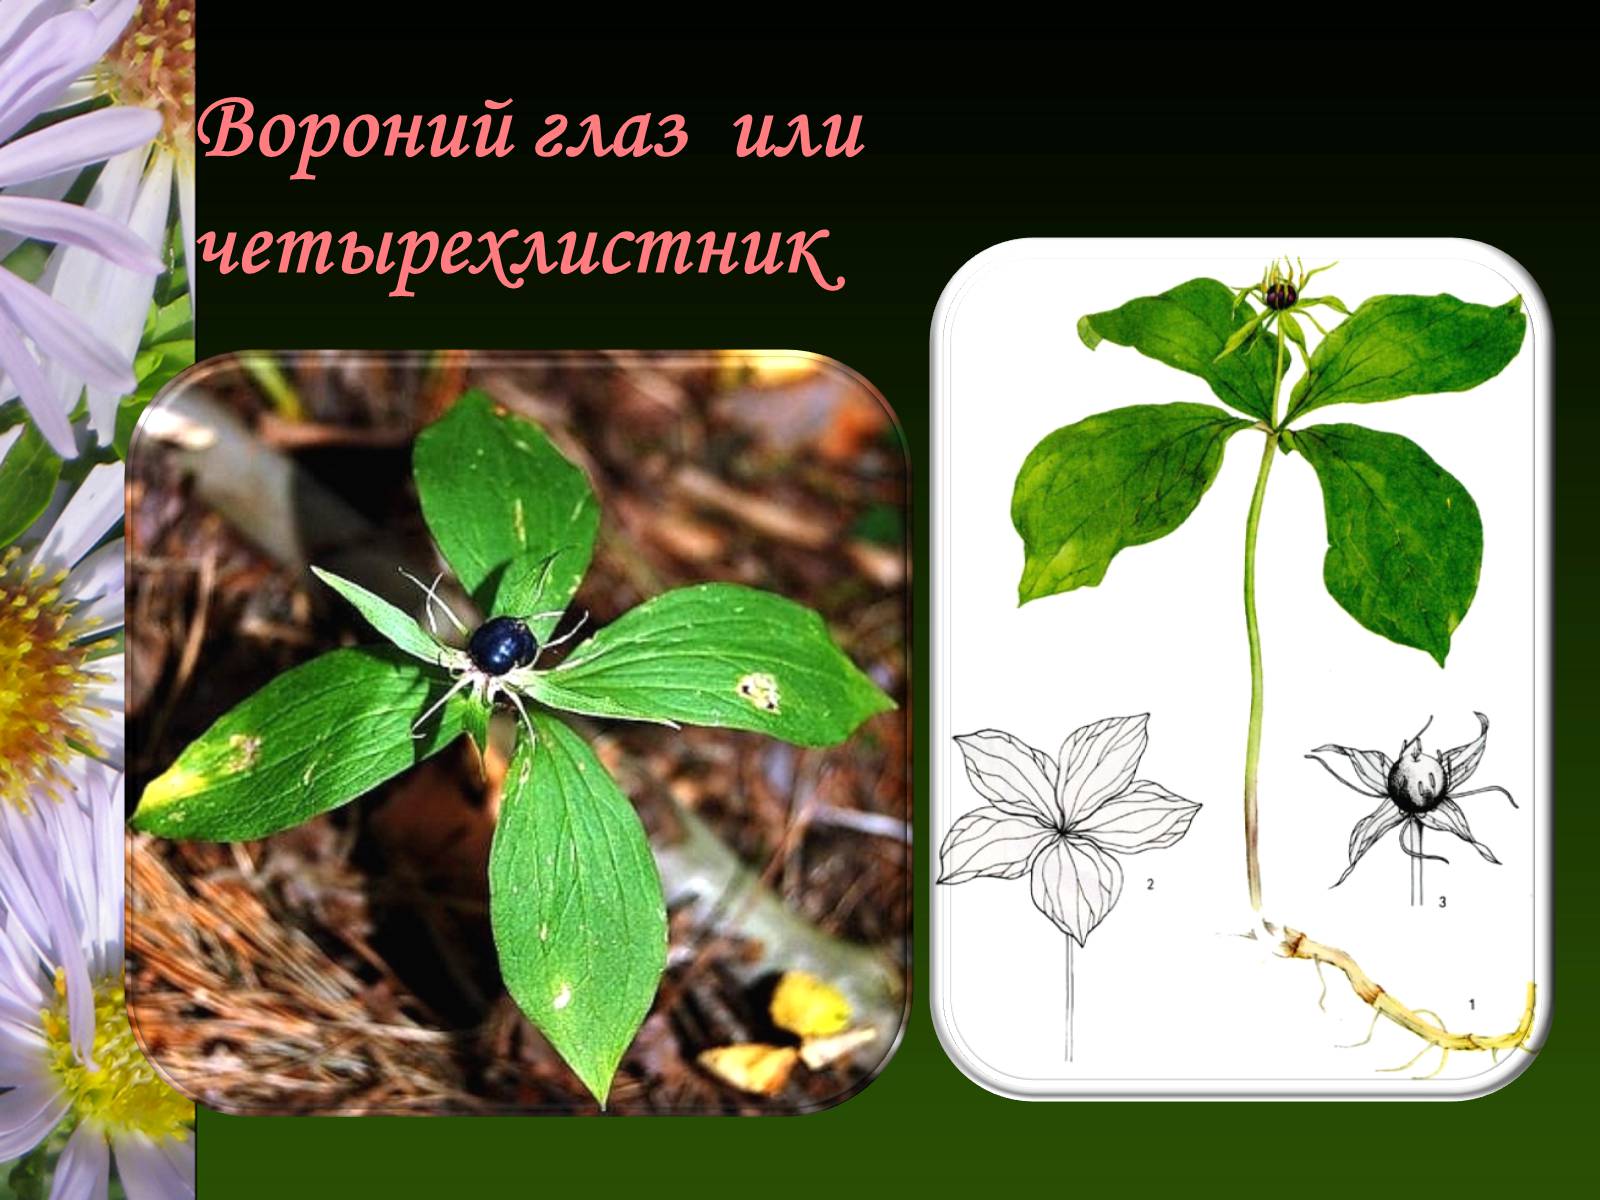 Презентація на тему «Ядовитые растения Украины» - Слайд #19